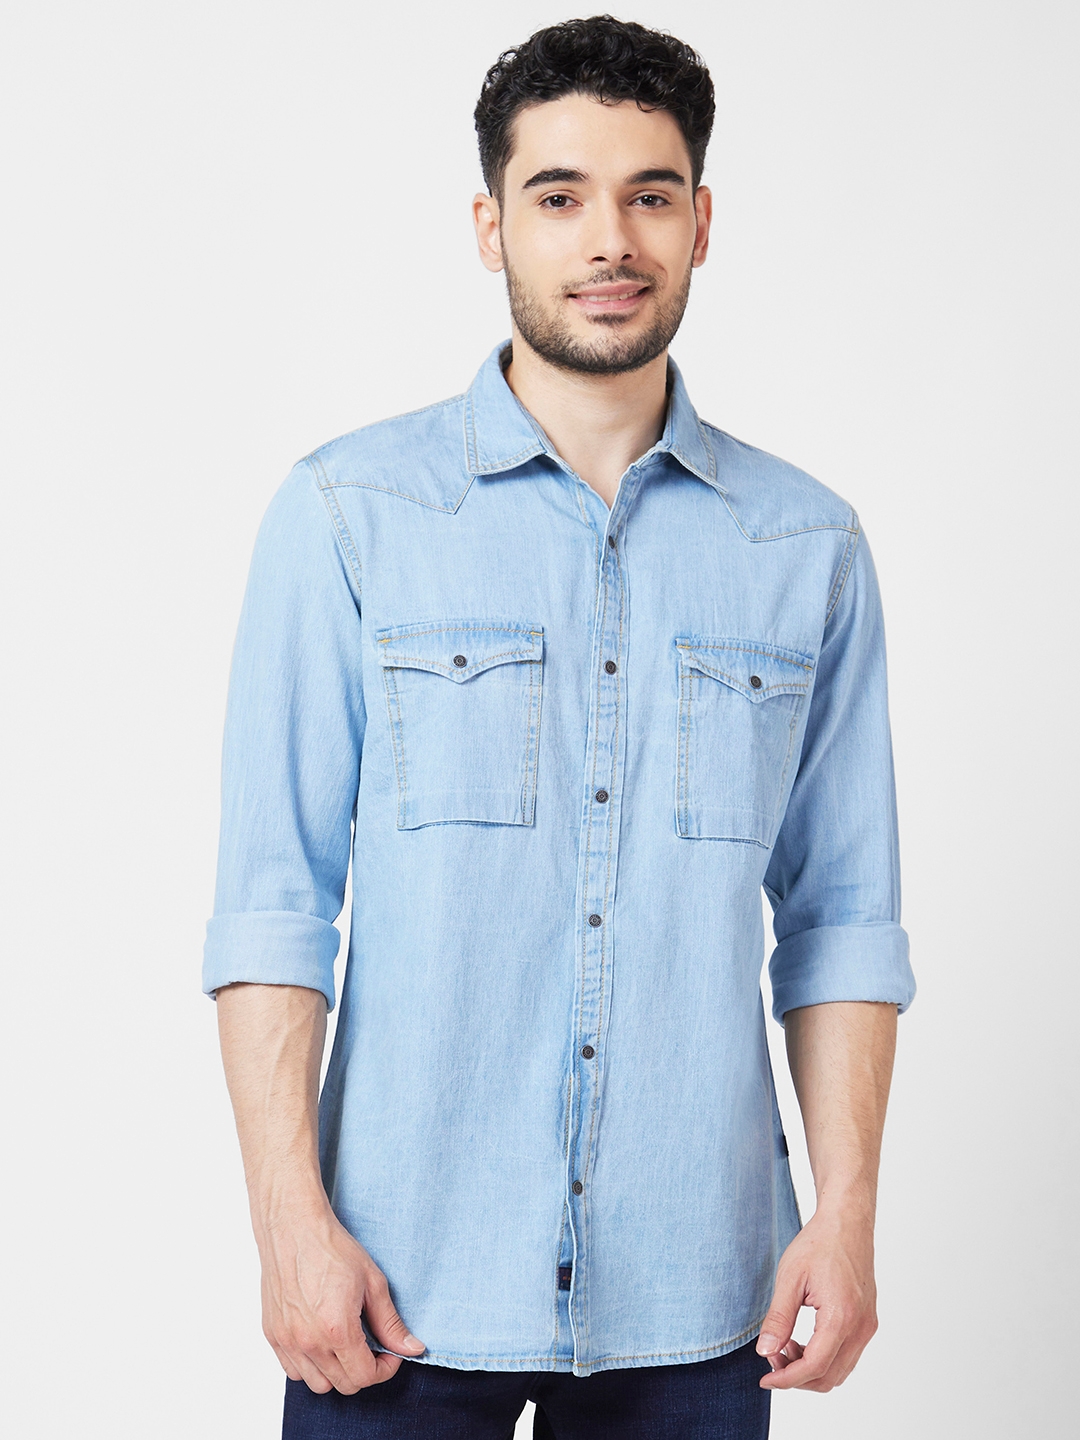 Mens Denim Shirts Casual Slim Fit Denim Shirt Jeans Long Sleeve Tops Button  Tops | eBay